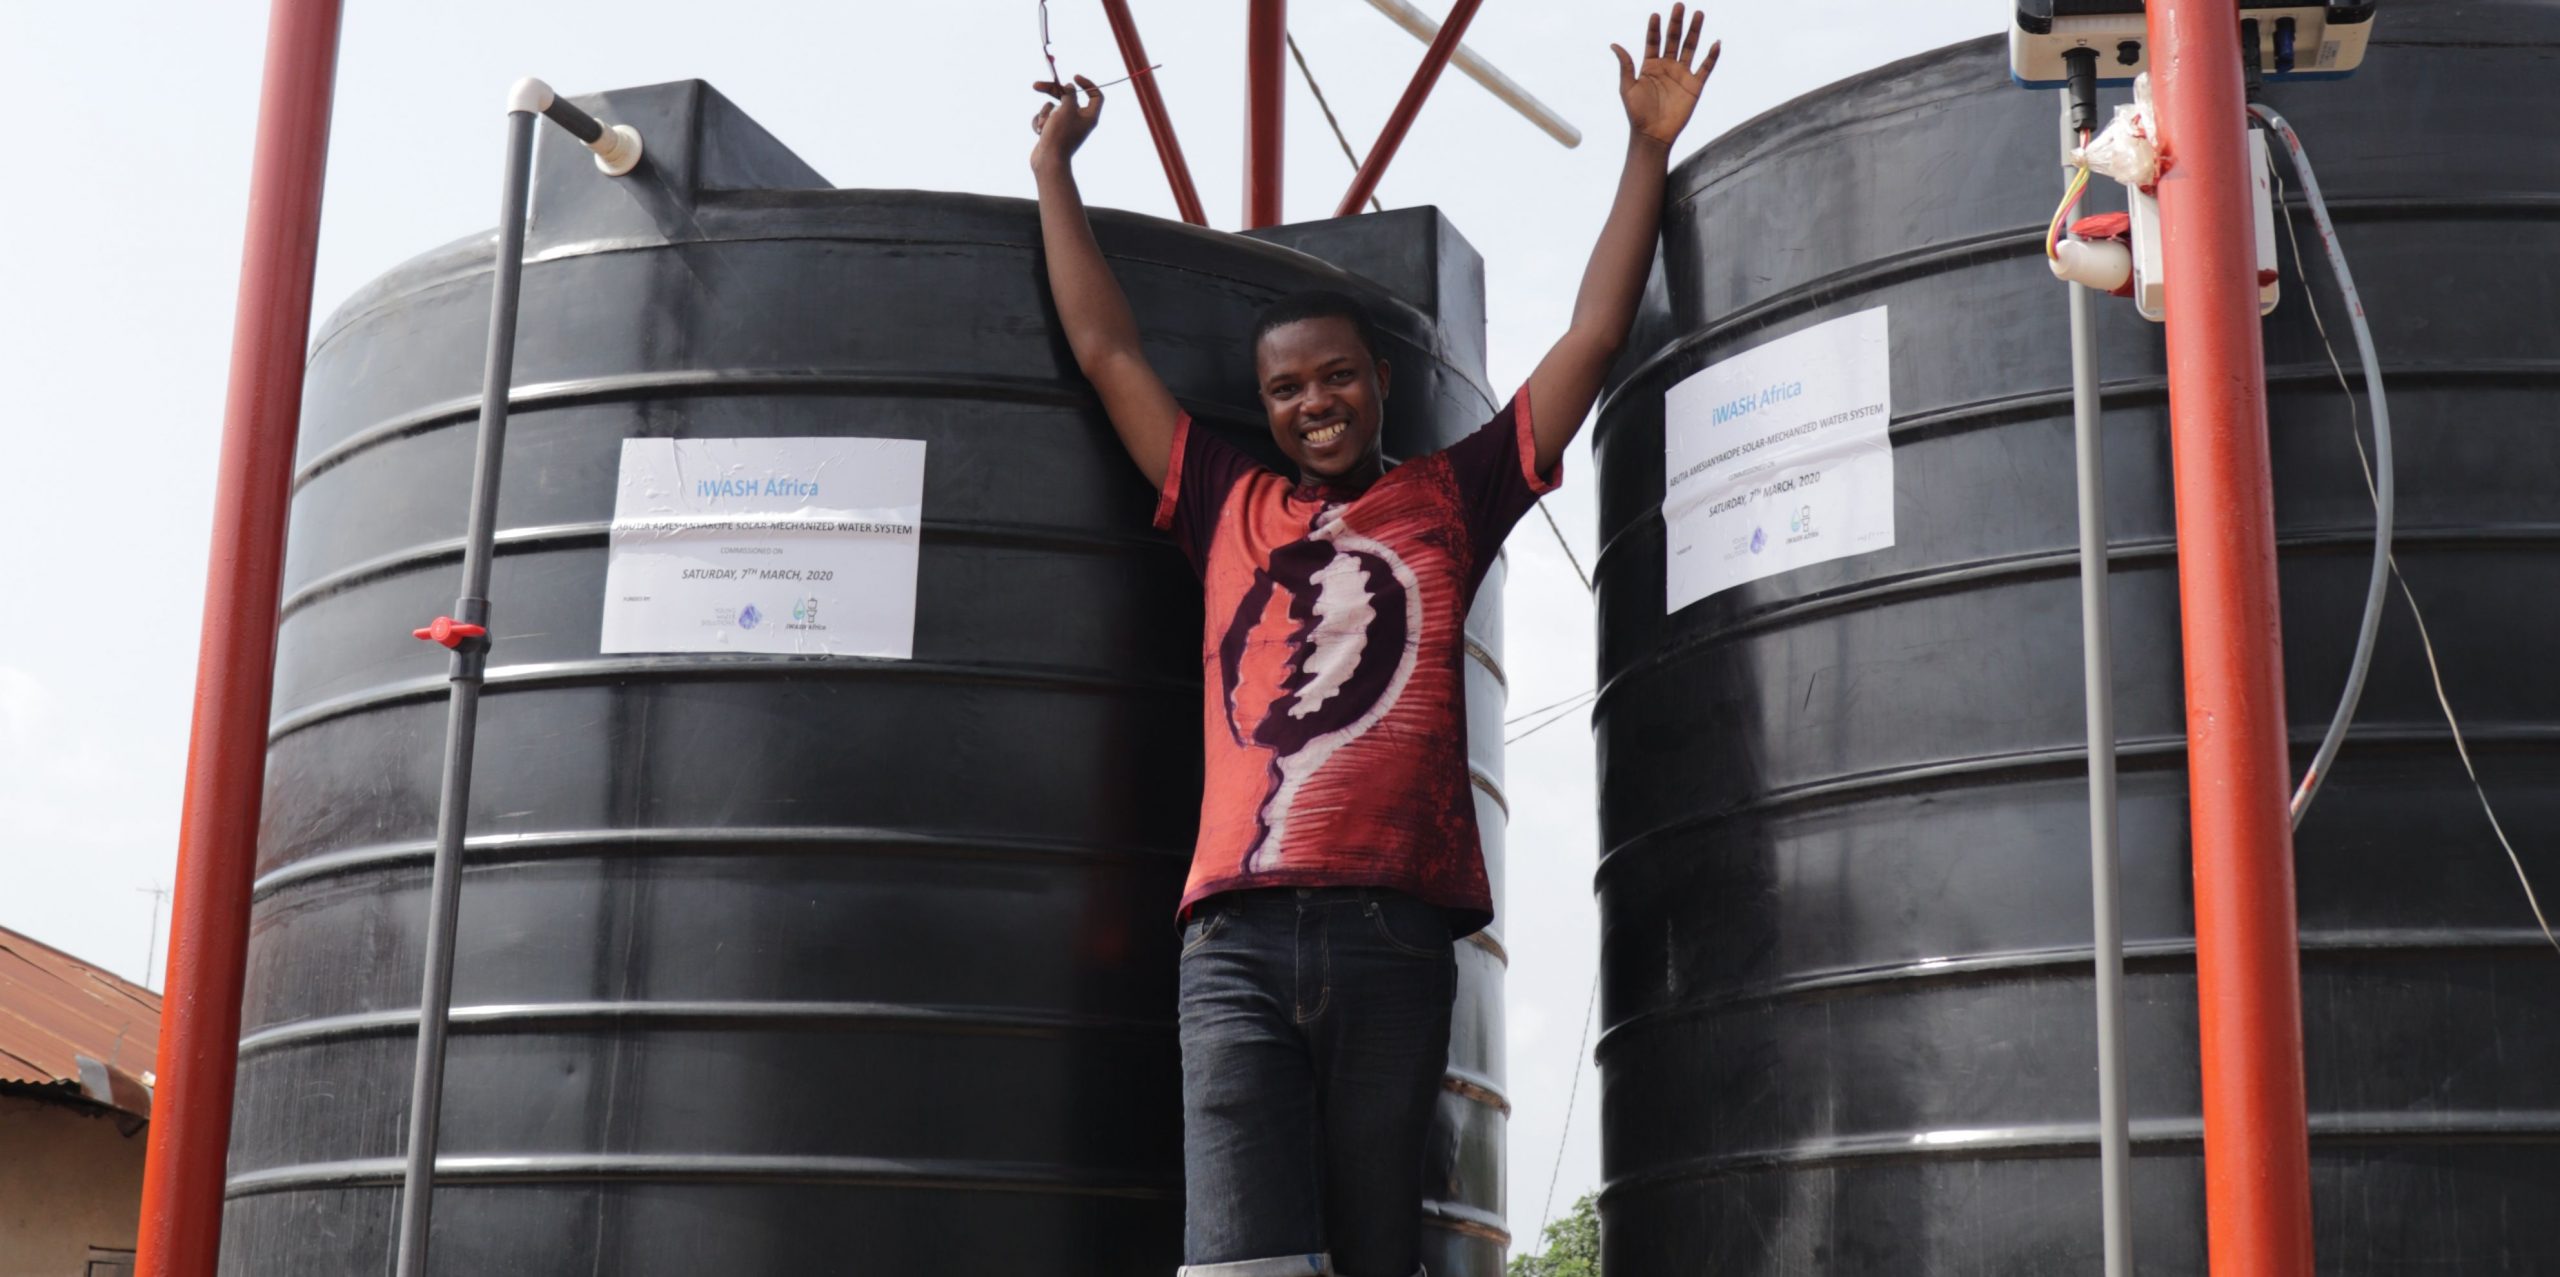 Fellow Jacob Amengor from Ghana inaugurates water kiosk